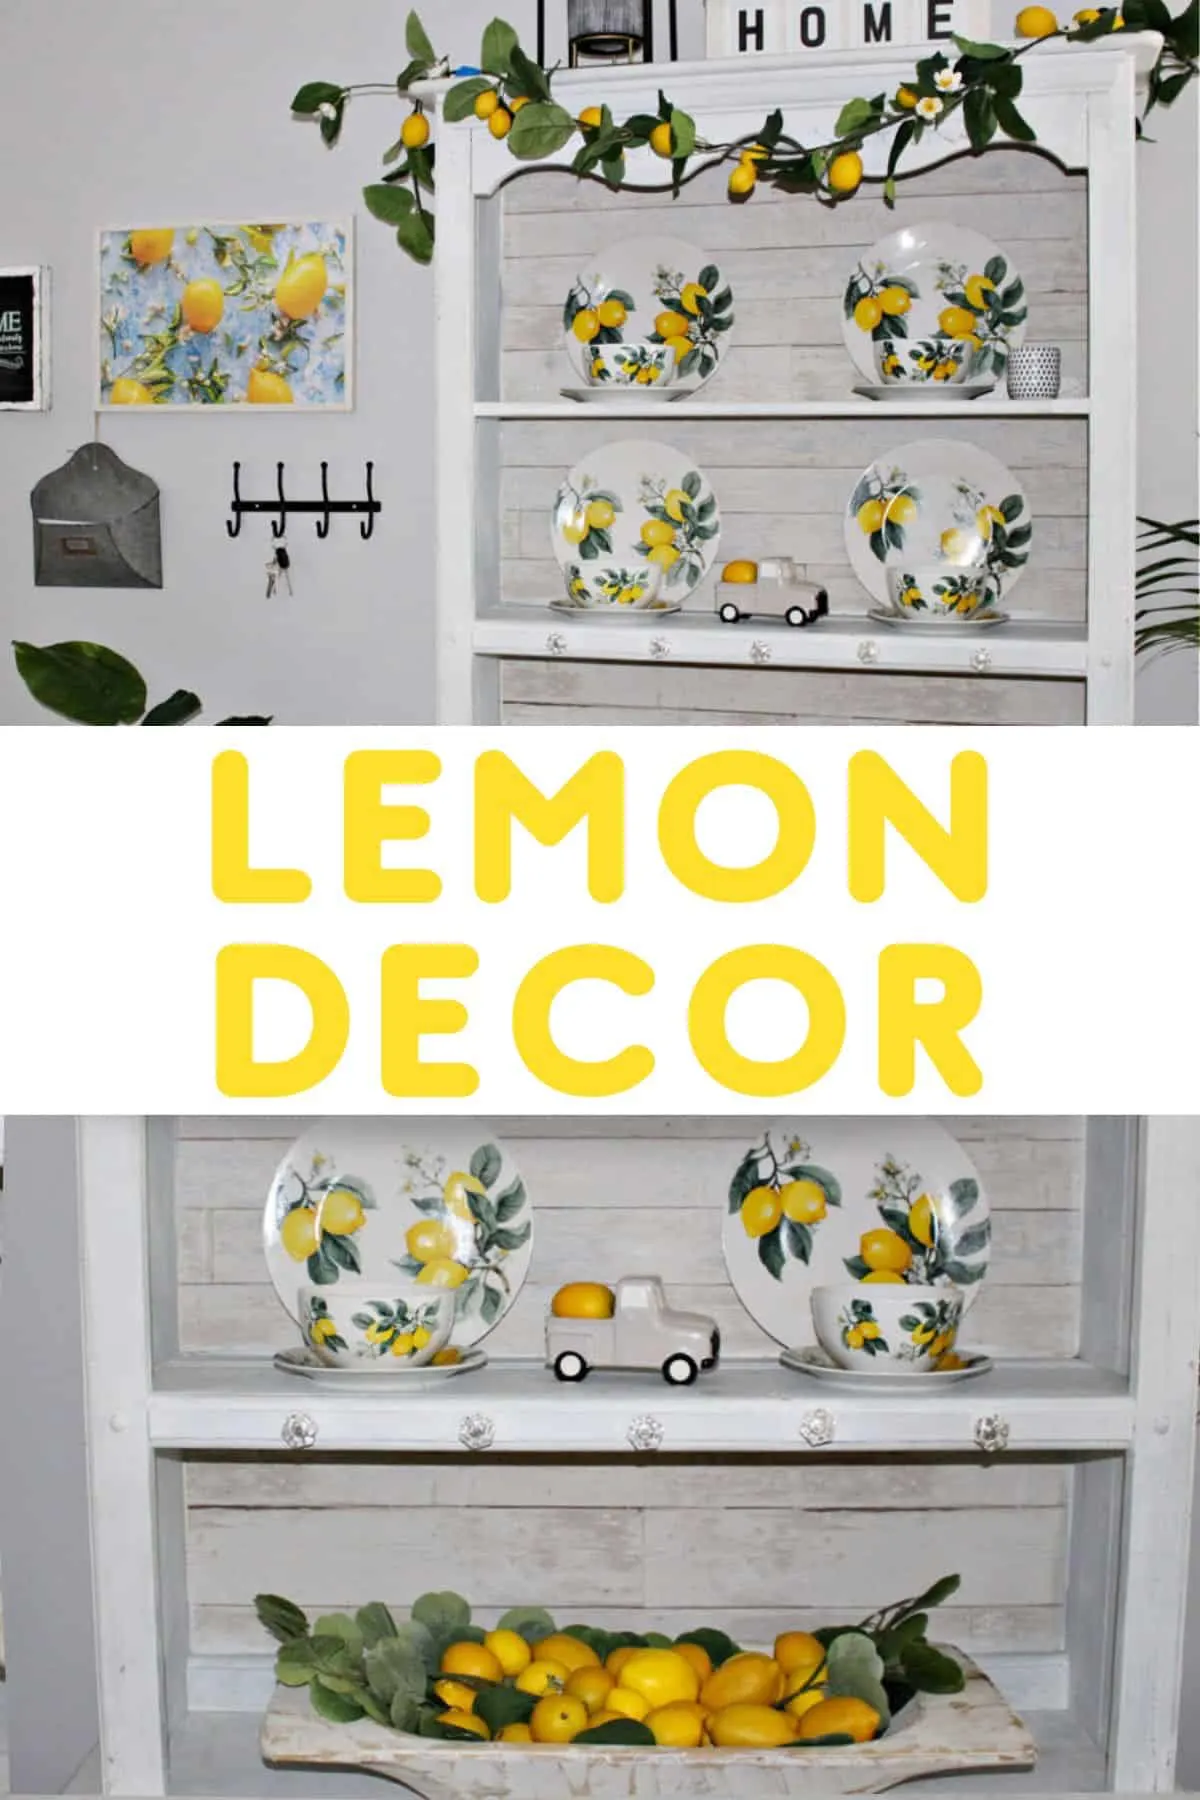 Lemon decor pin collage